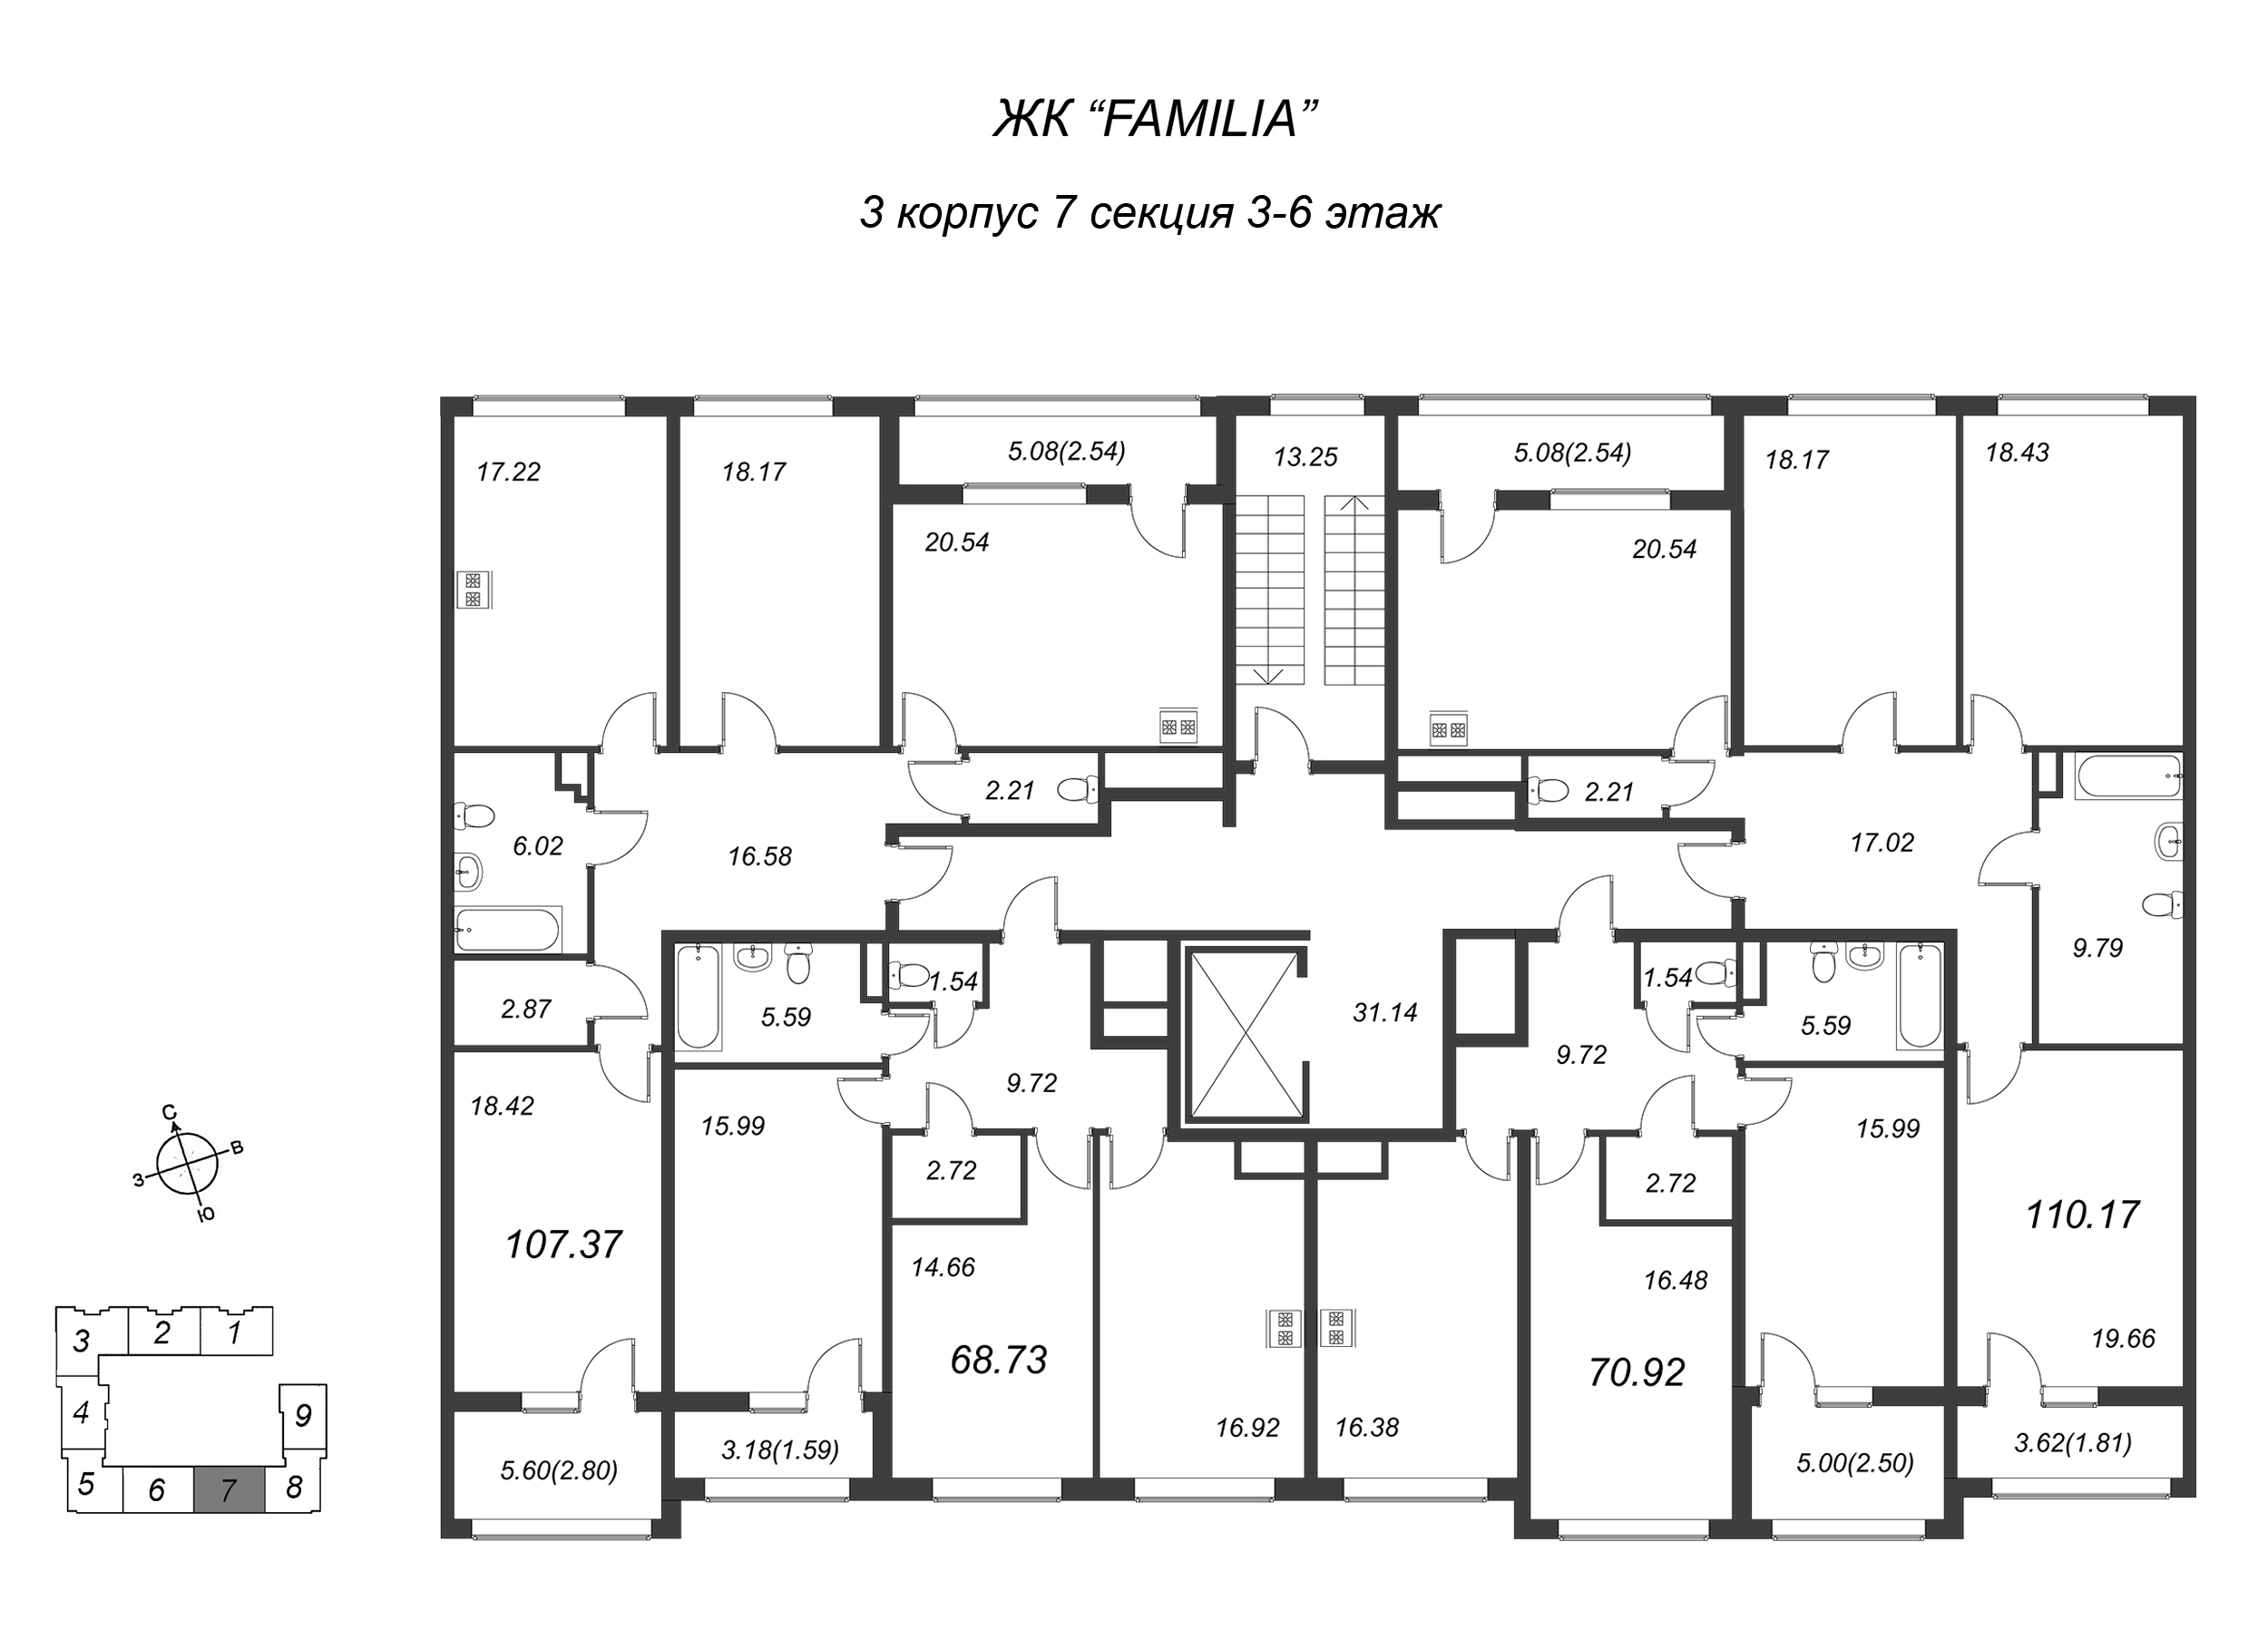 4-комнатная (Евро) квартира, 110.3 м² - планировка этажа